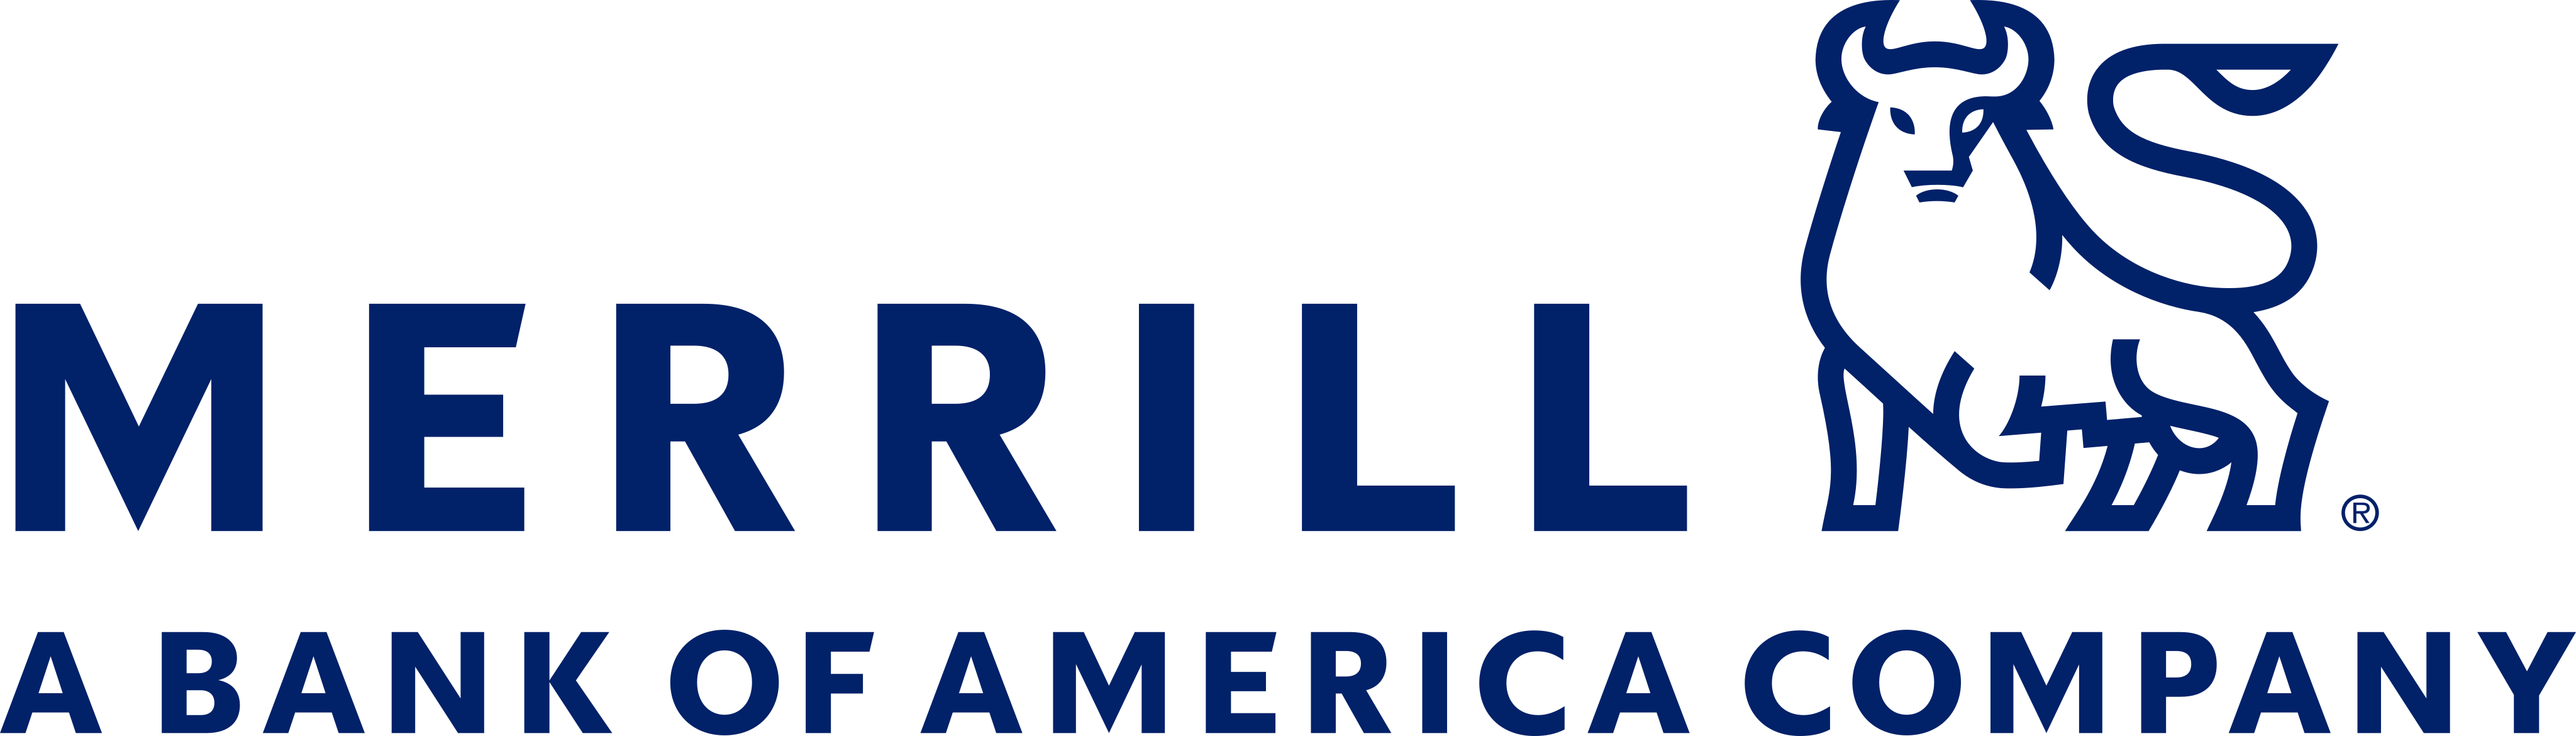 merrill lynch logo - Merrill Lynch Logo